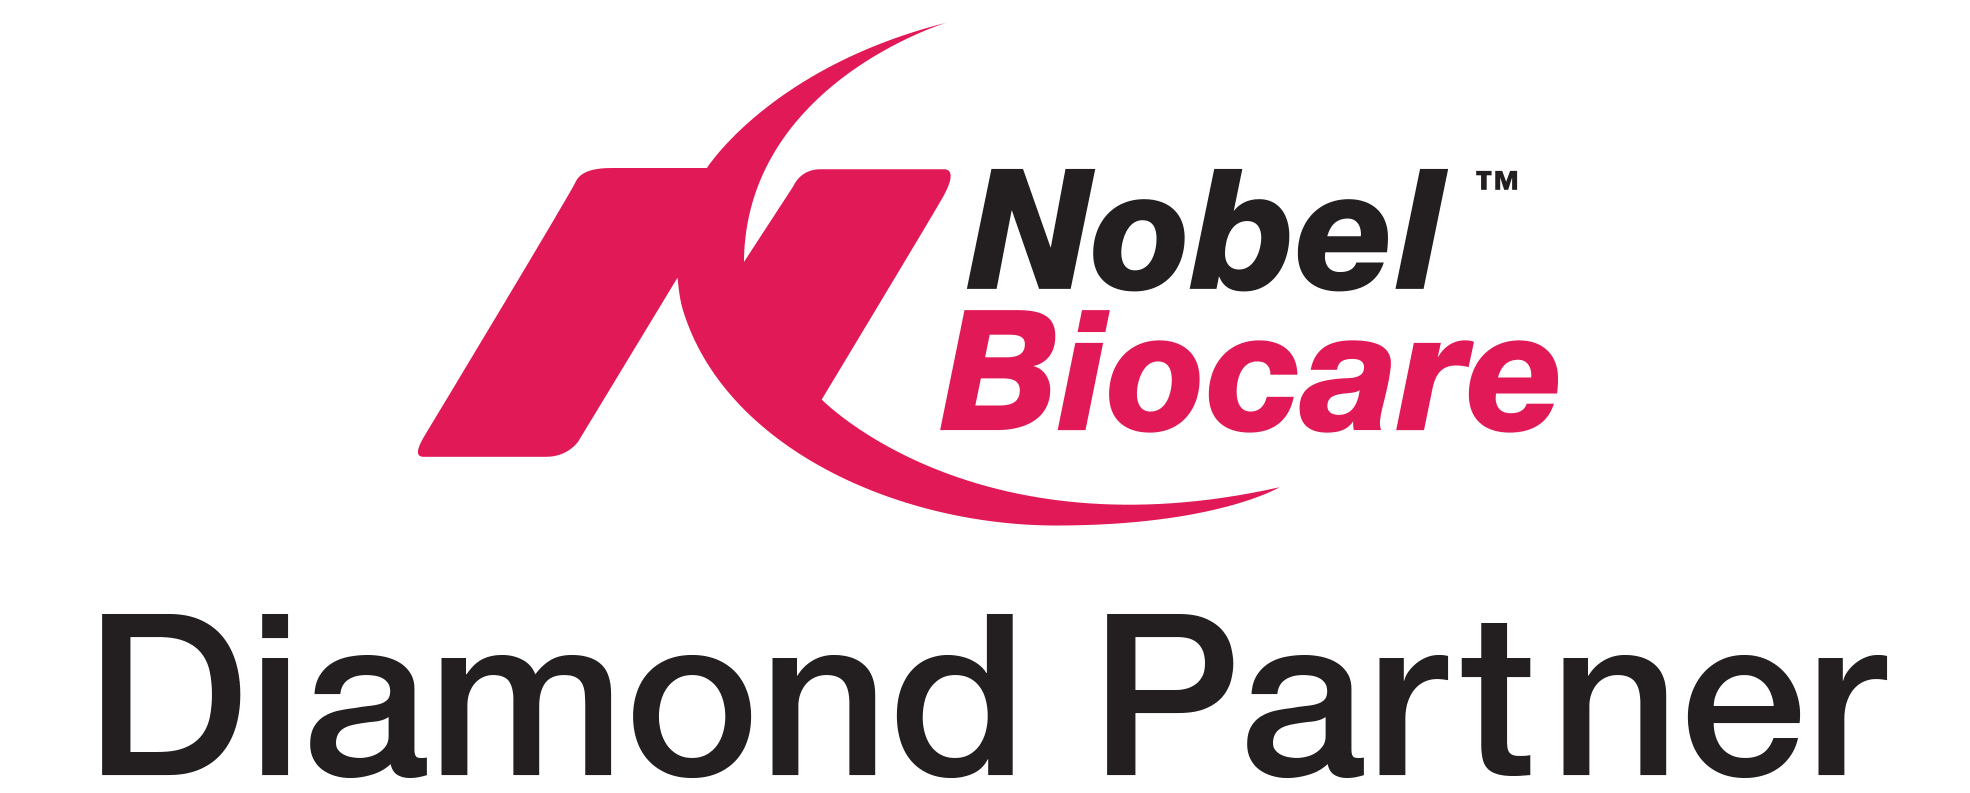 Nobel Biocare Diamond Partner